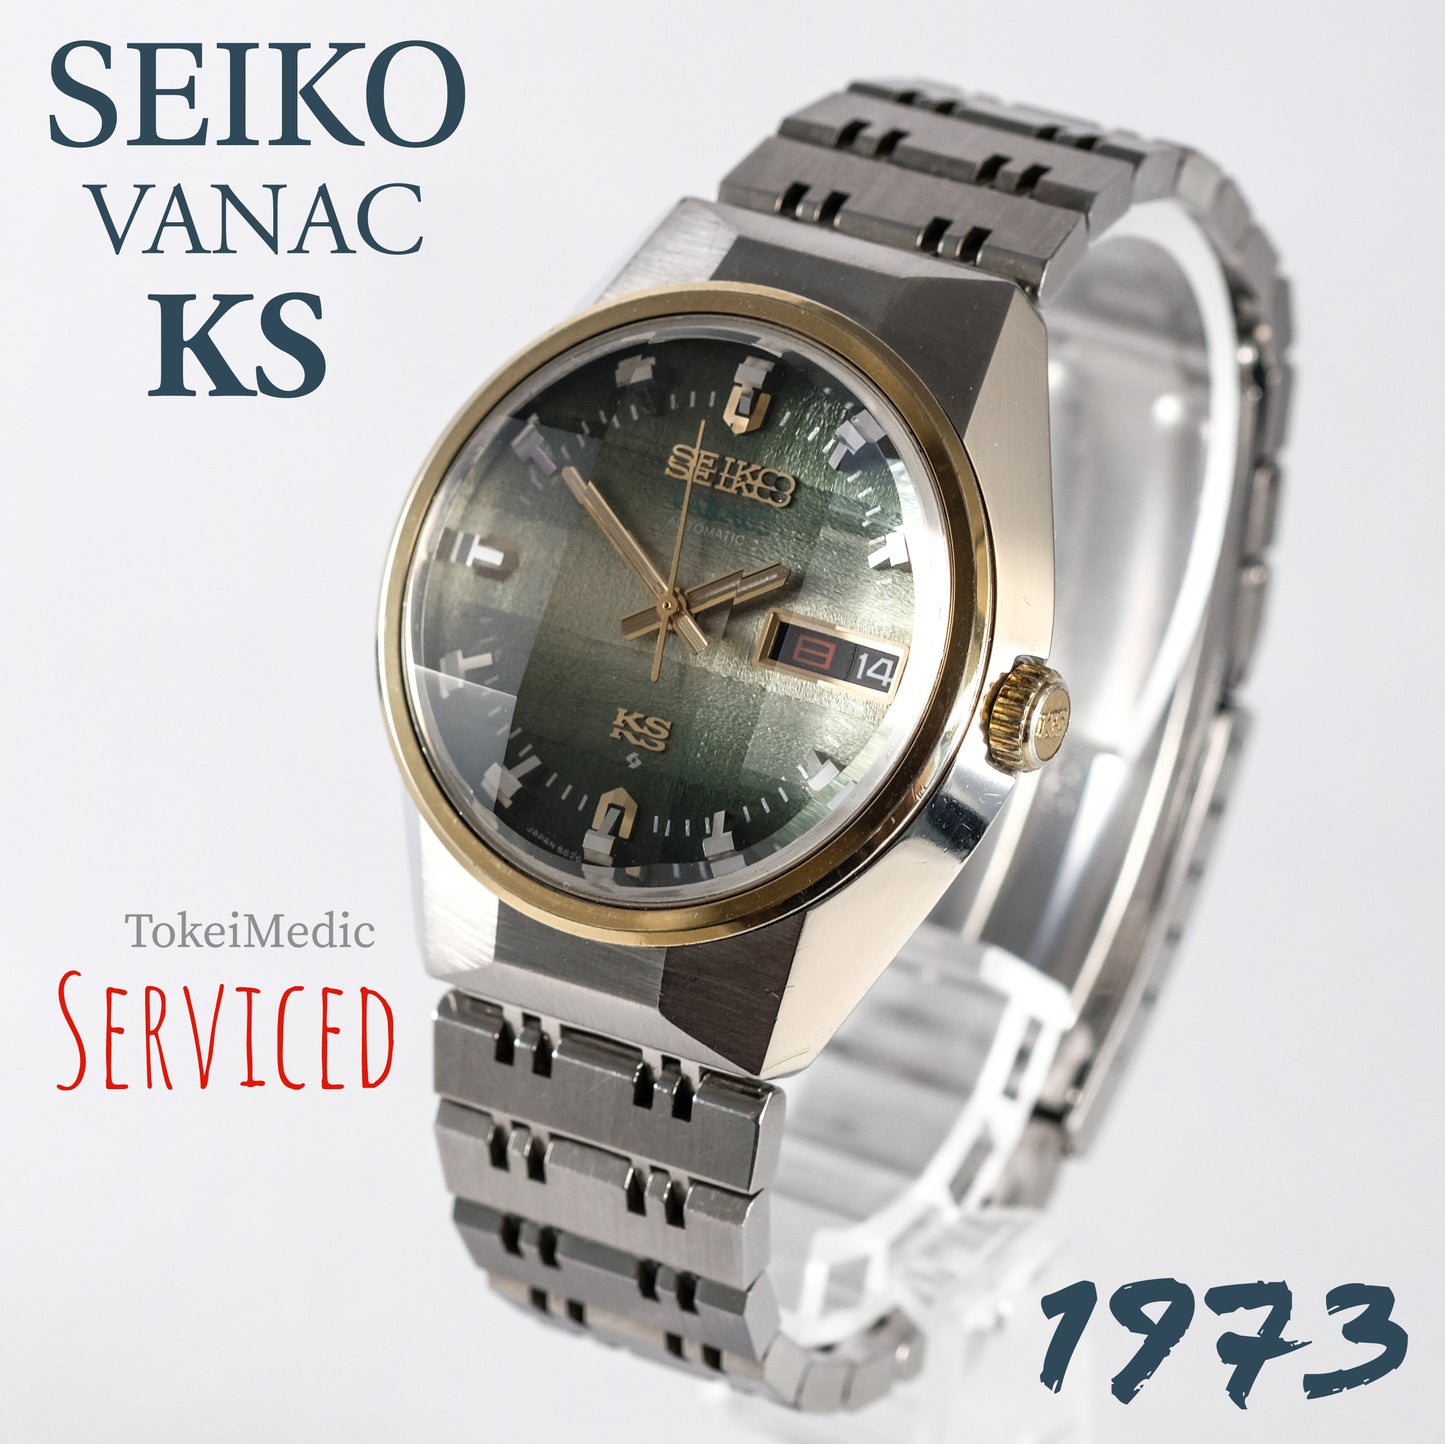 1973 Seiko Vanac KS 5626-7190